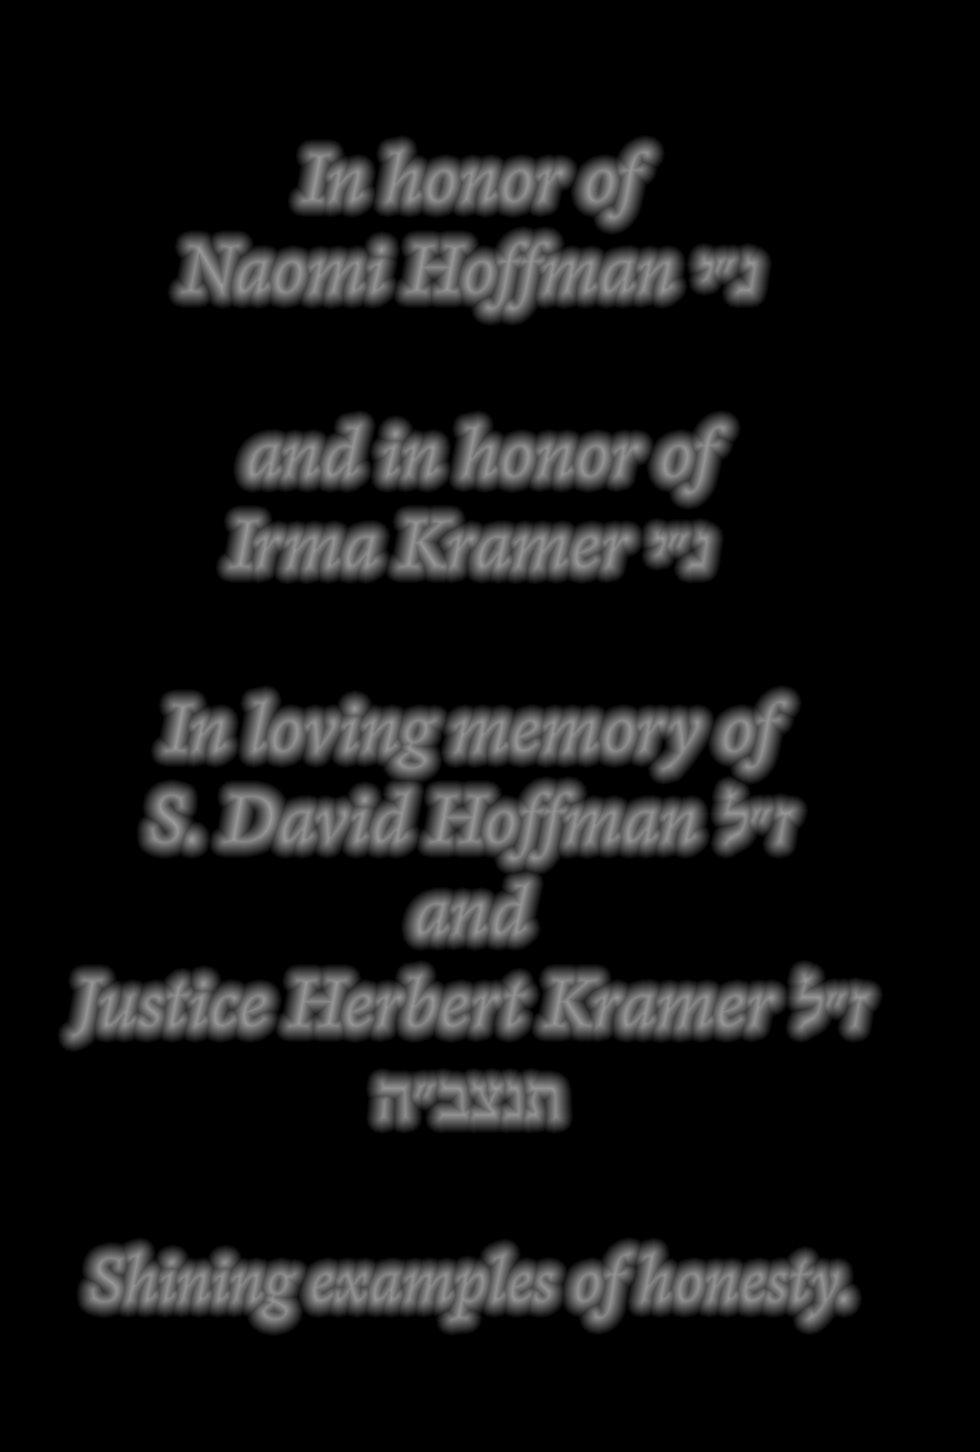 In honor of נ י Naomi Hoffman and in honor of נ י Irma Kramer In loving memory of ז